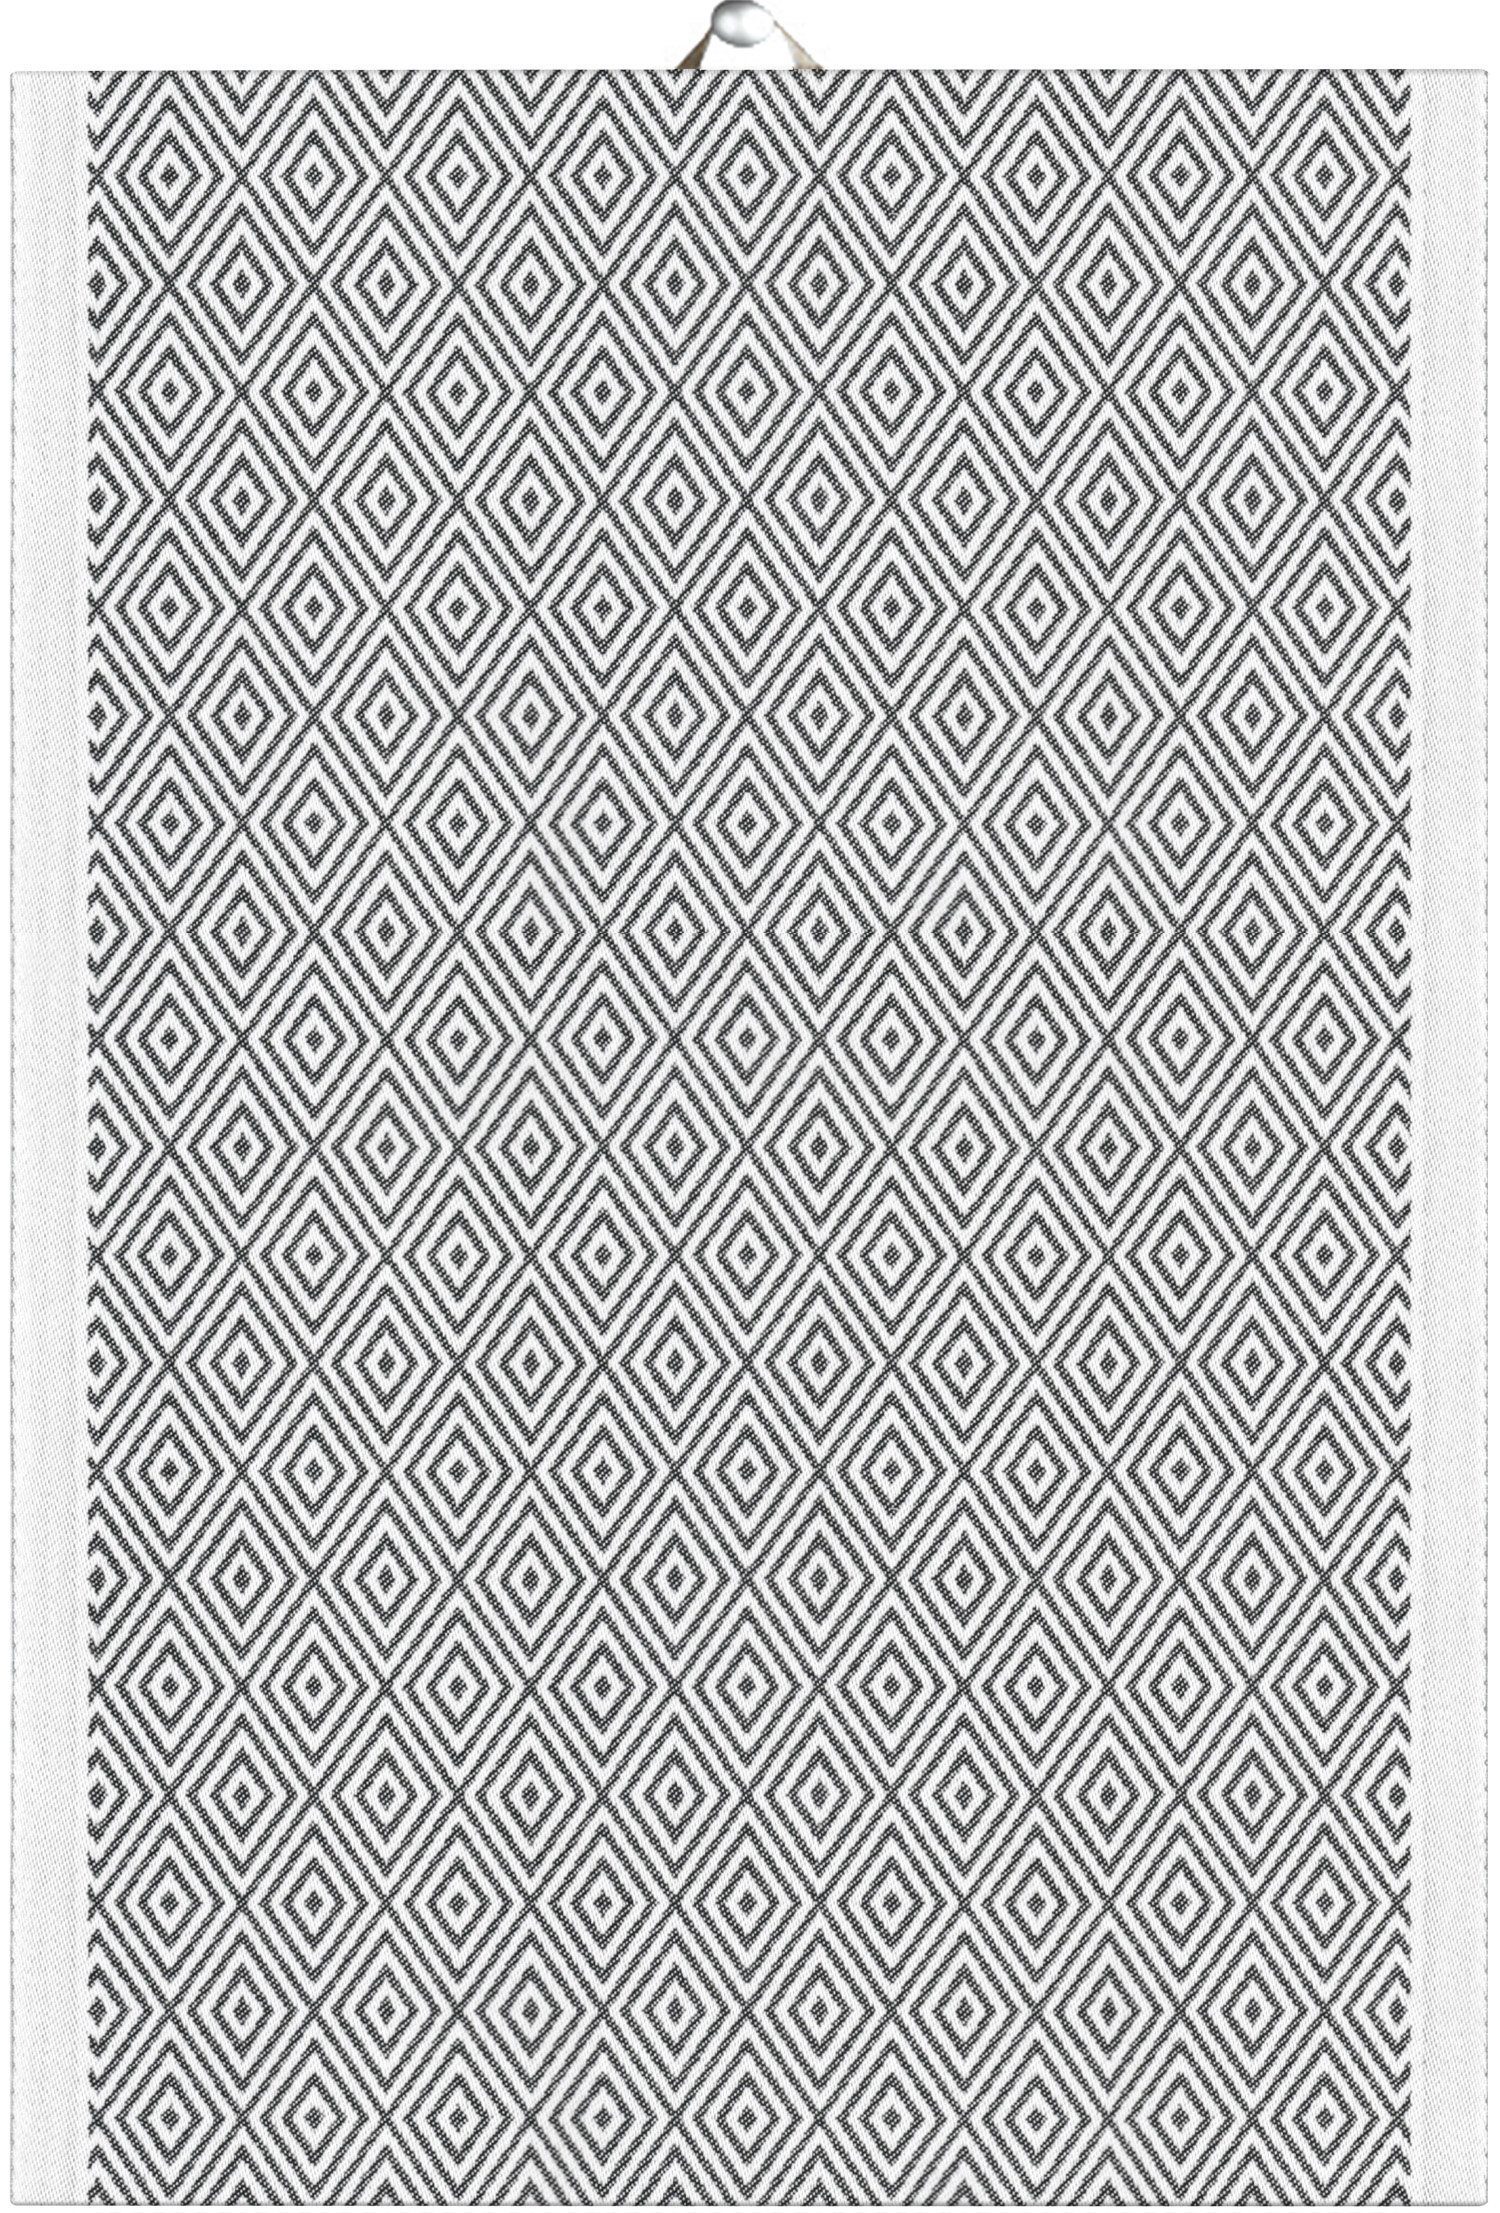 Ekelund Geschirrtuch Küchenhandtuch Gåsöga 090 35x50 cm, (1-tlg., 1 x Geschirrtuch), Pixel gewebt (3-farbig)